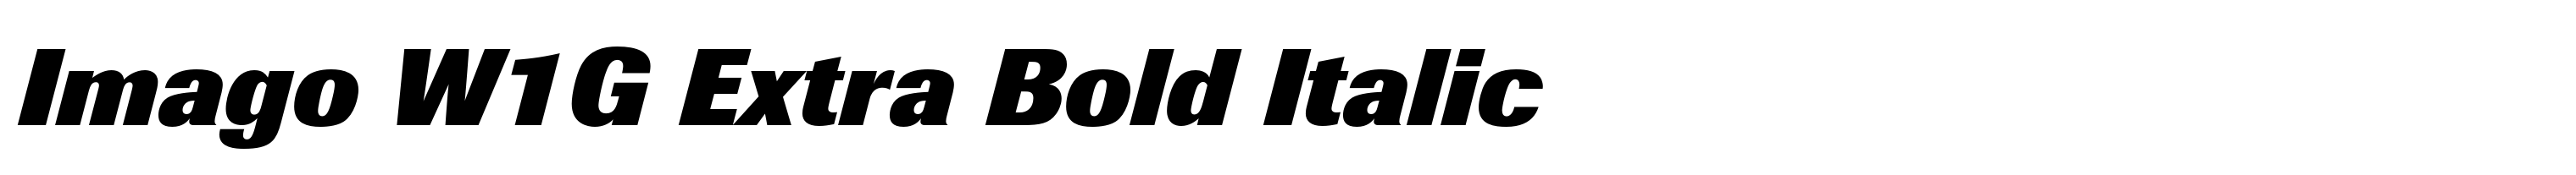 Imago W1G Extra Bold Italic